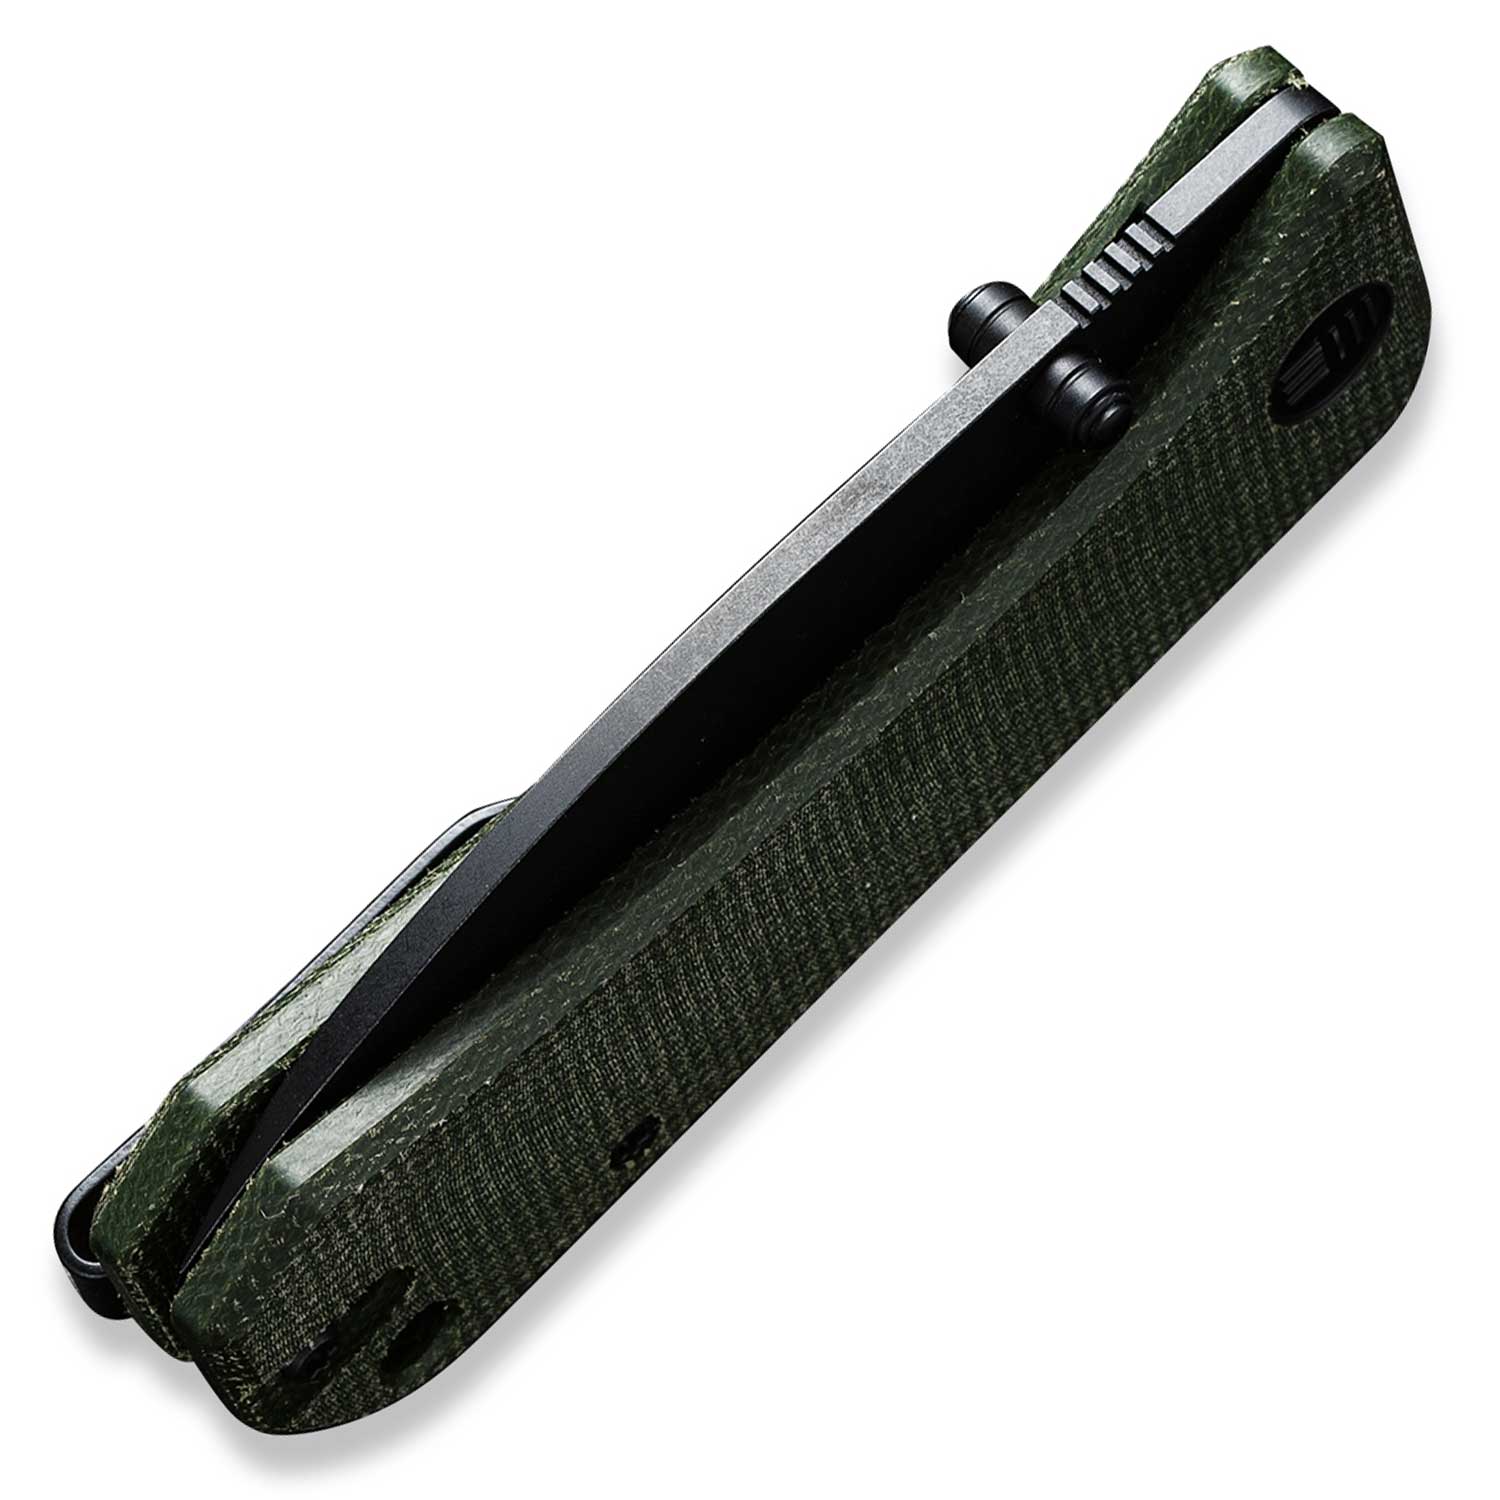 Banter Pocket Knife - Green Micarta - S35VN